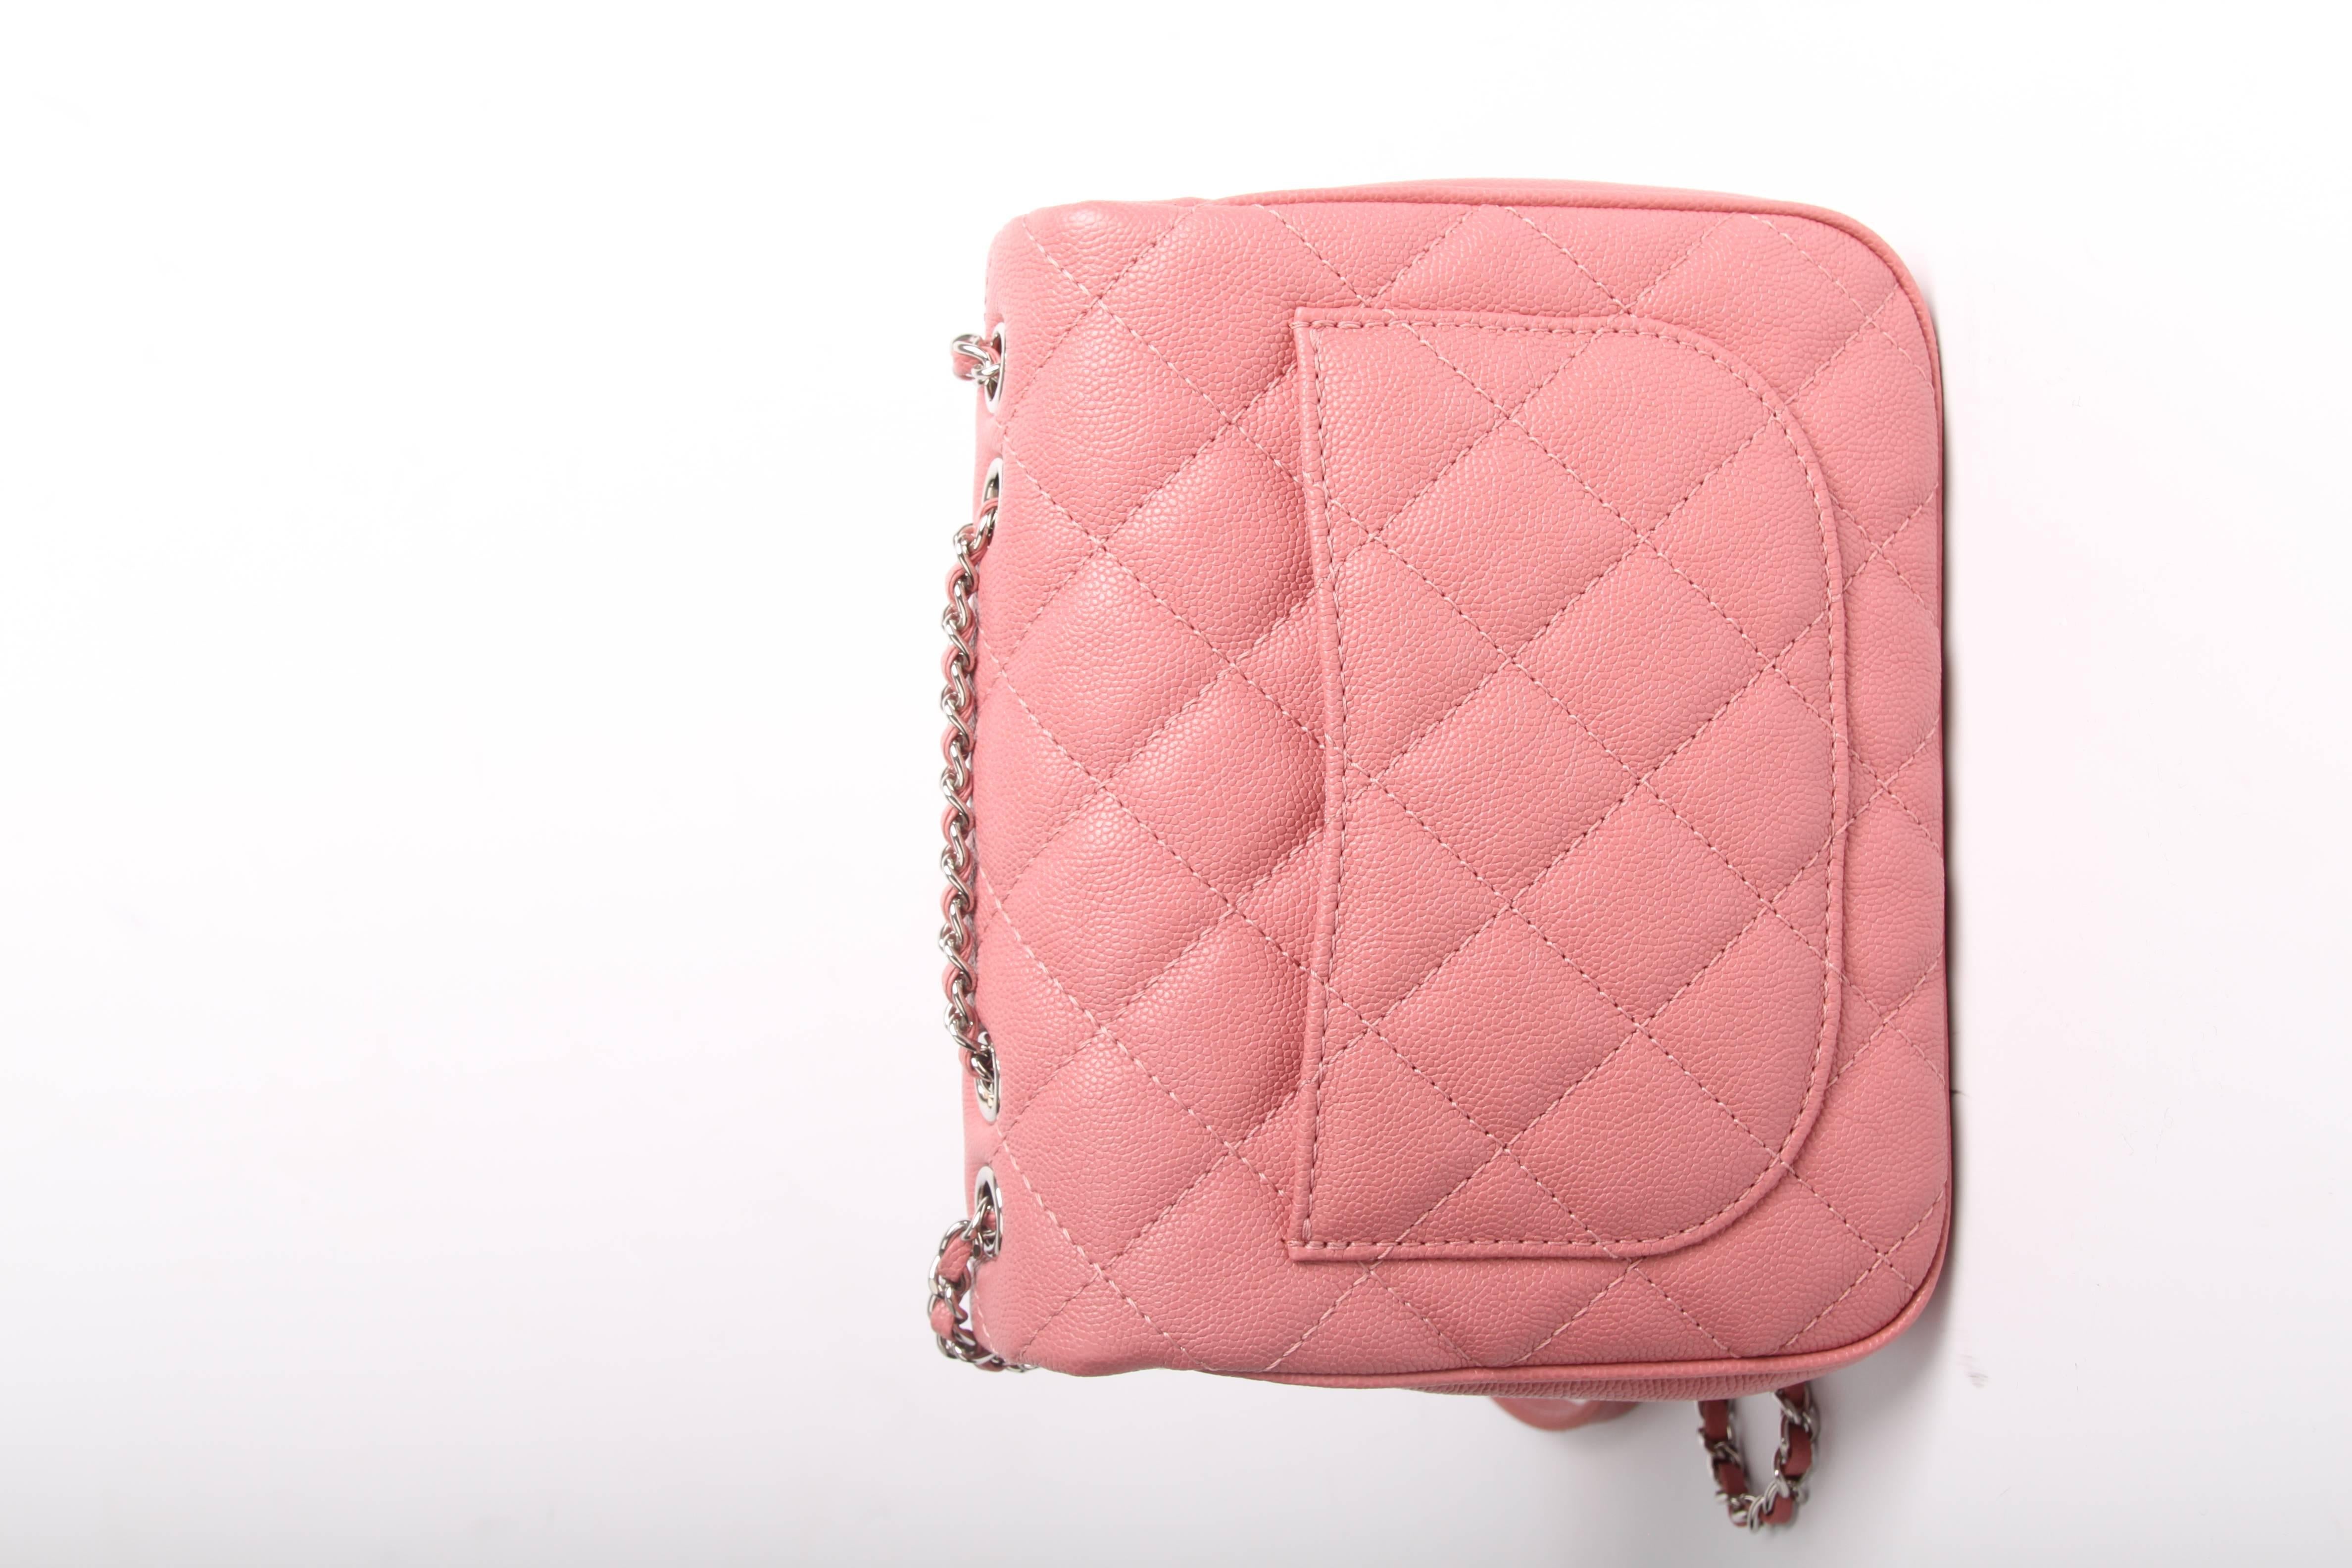 Women's or Men's Chanel Urban Companion Bag - dusty pink